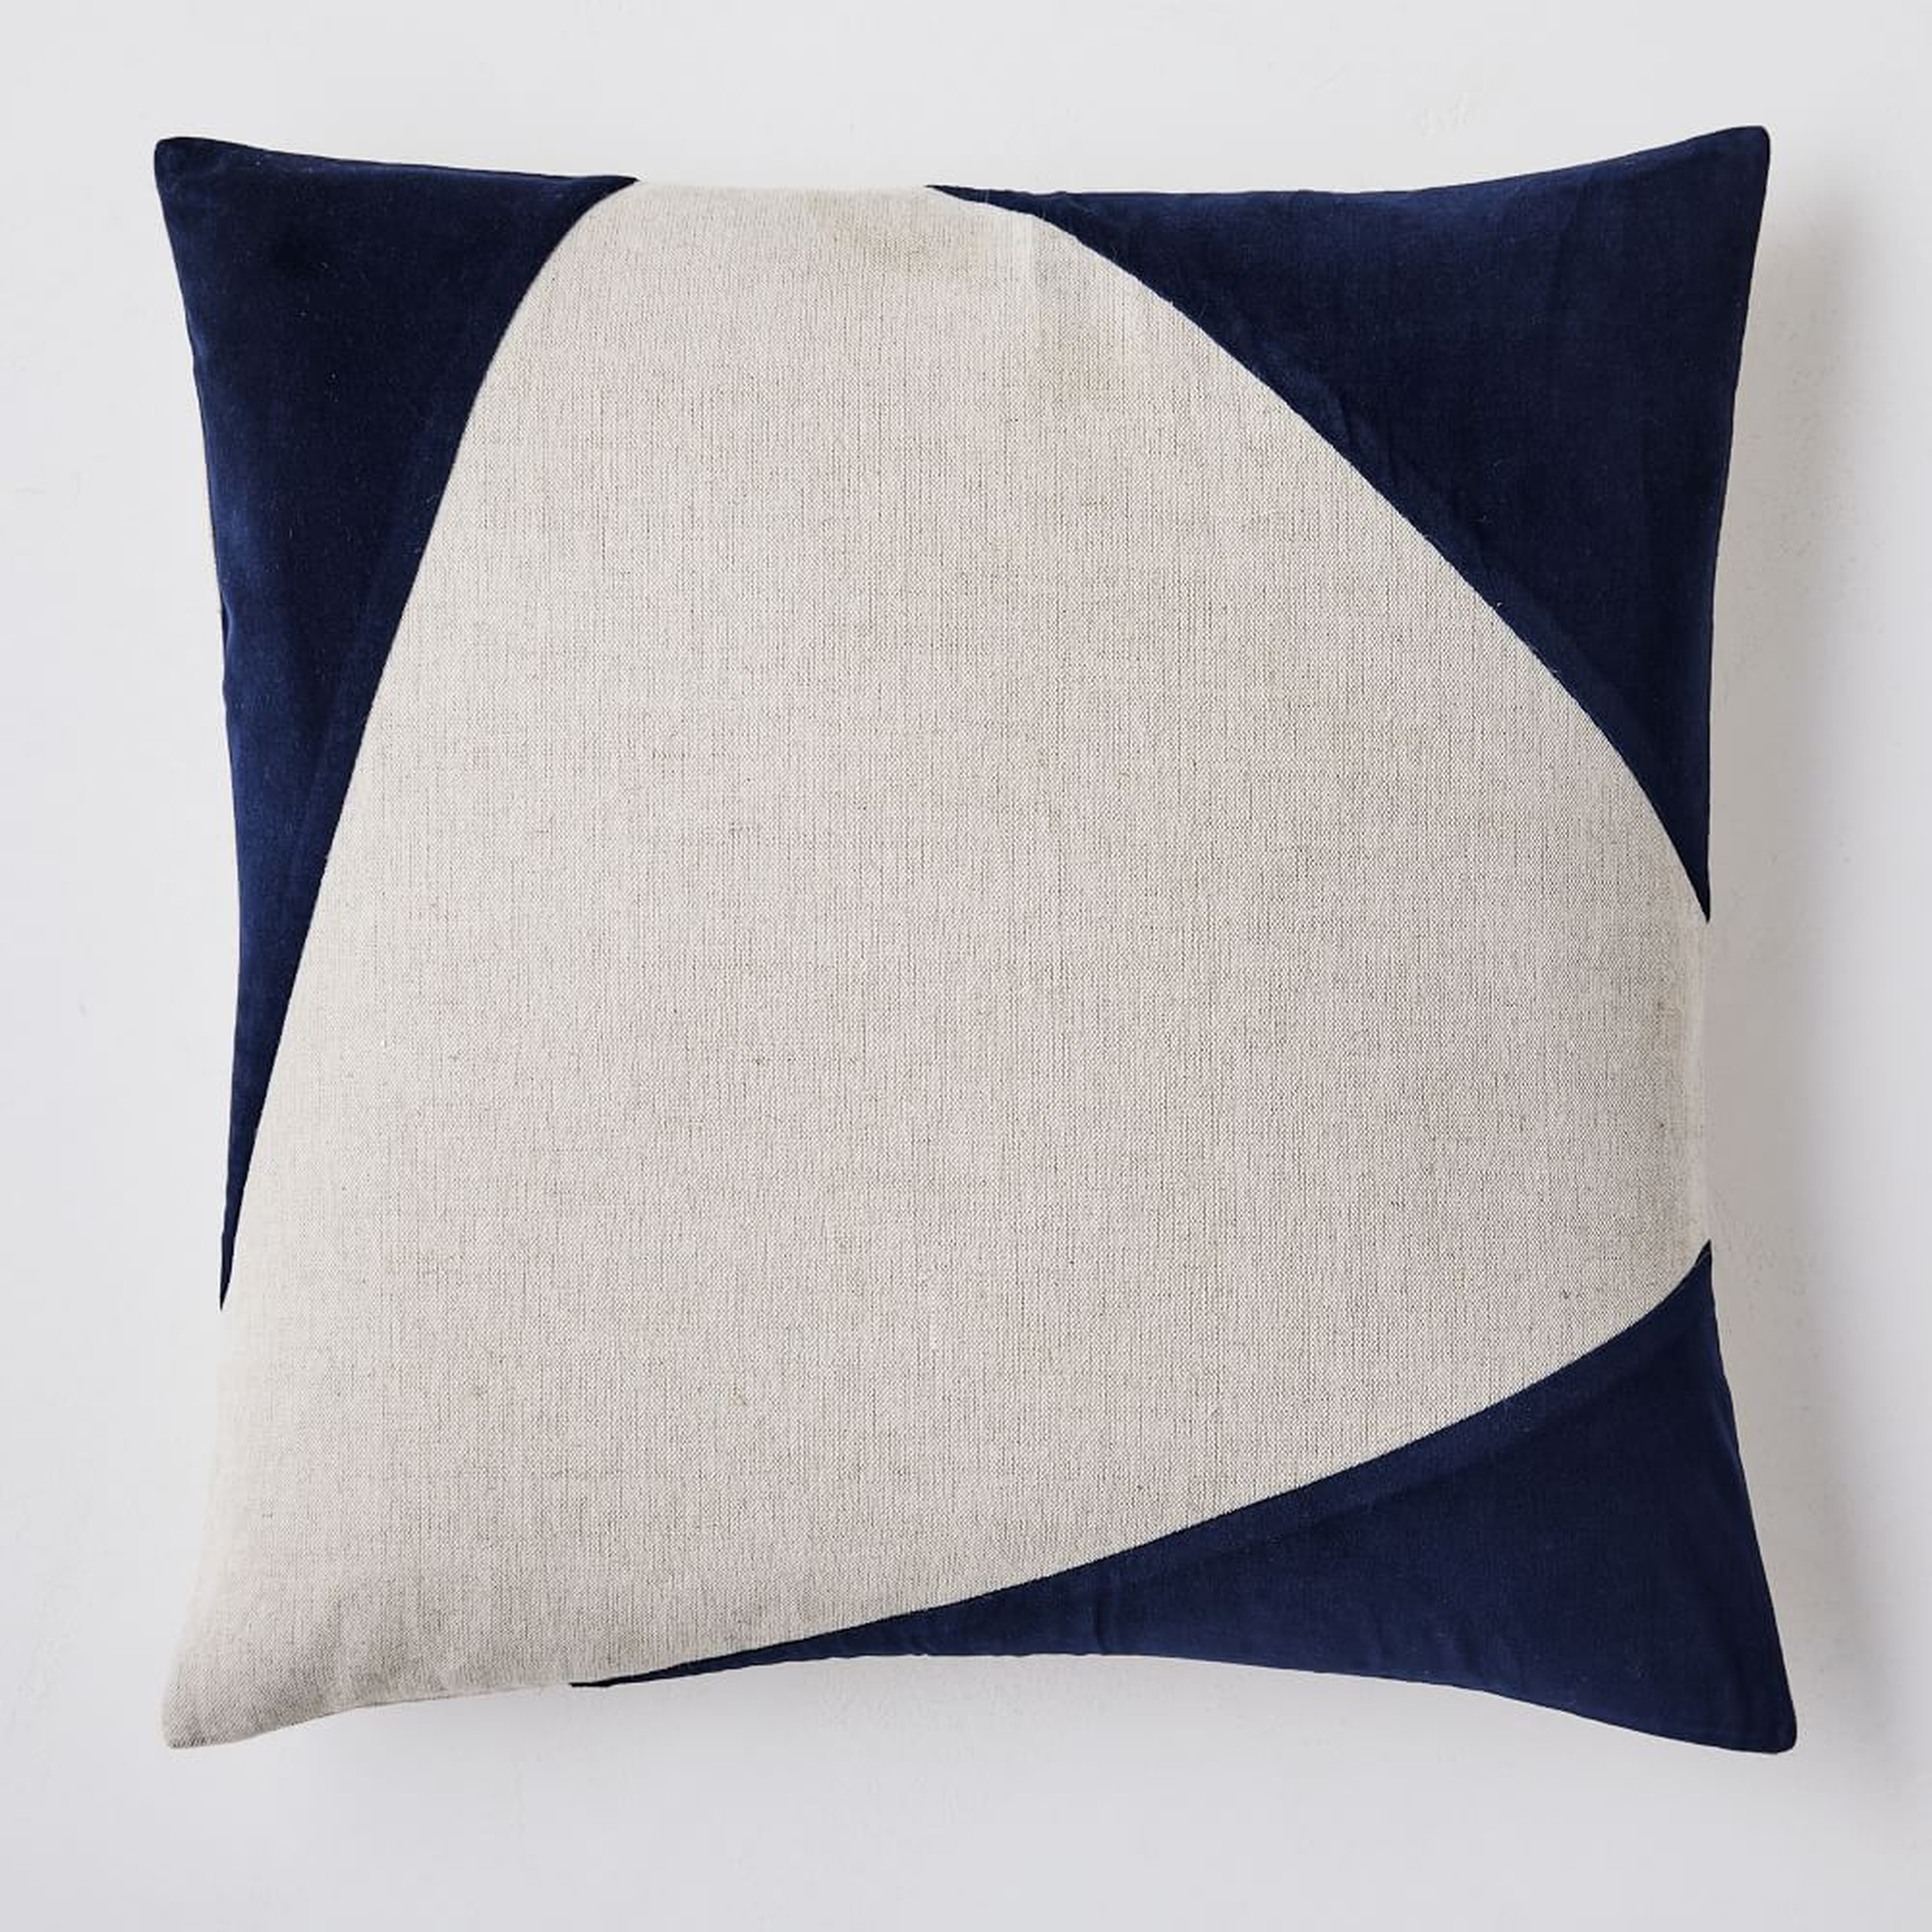 Cotton Linen + Velvet Corners Pillow Cover, 24"x24", Midnight - West Elm